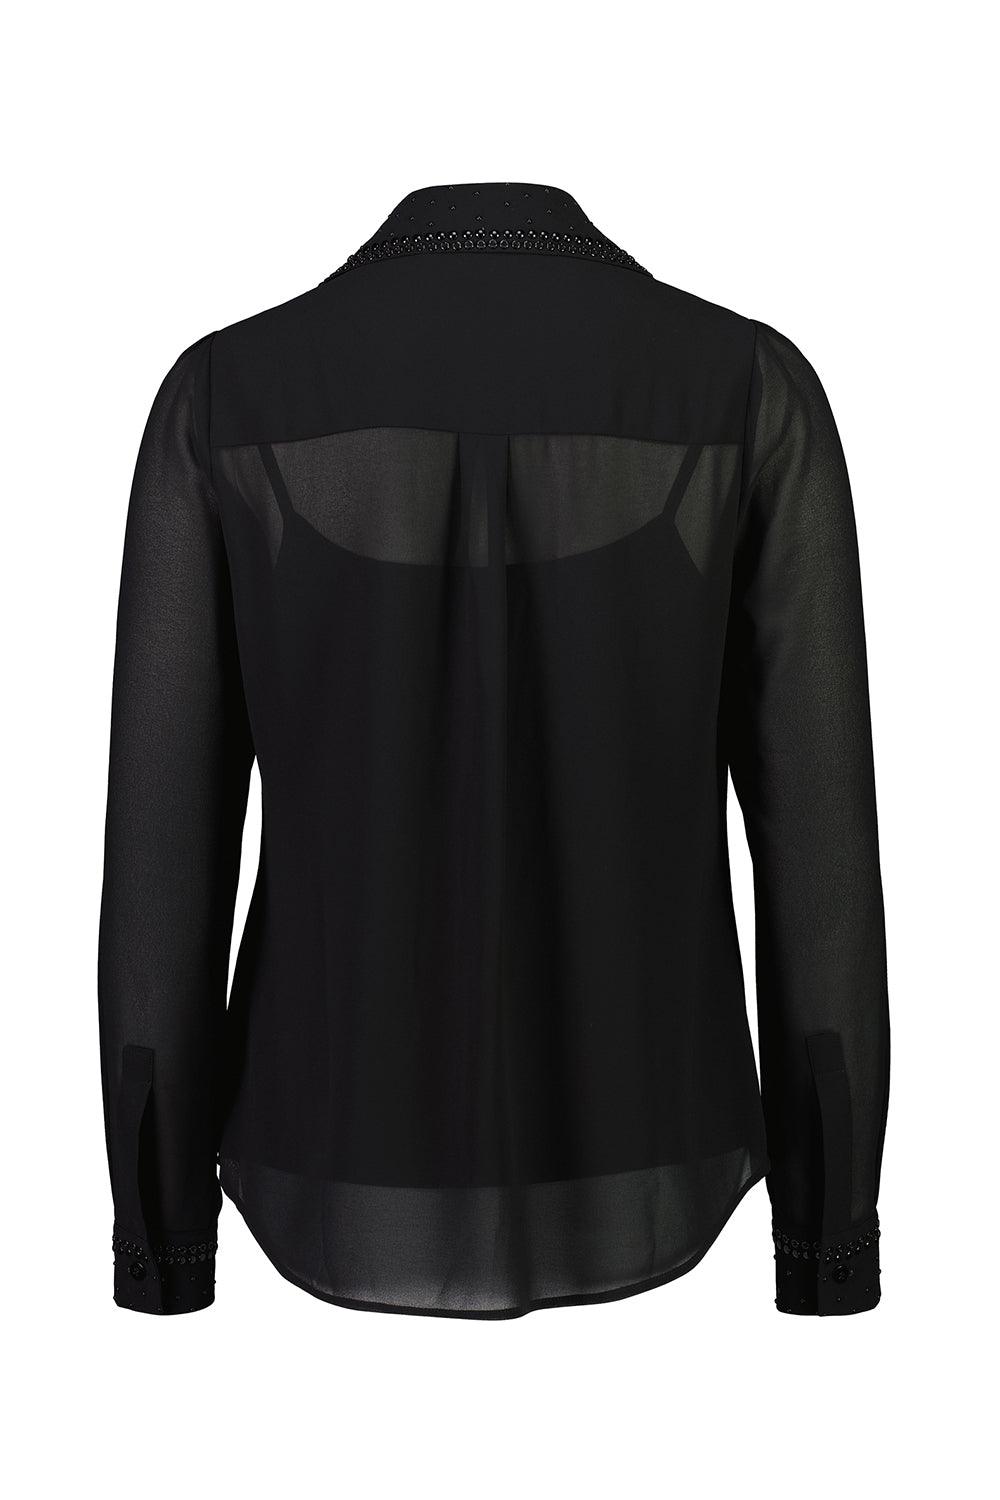 Allure Shirt - Black - Shirt VERGE